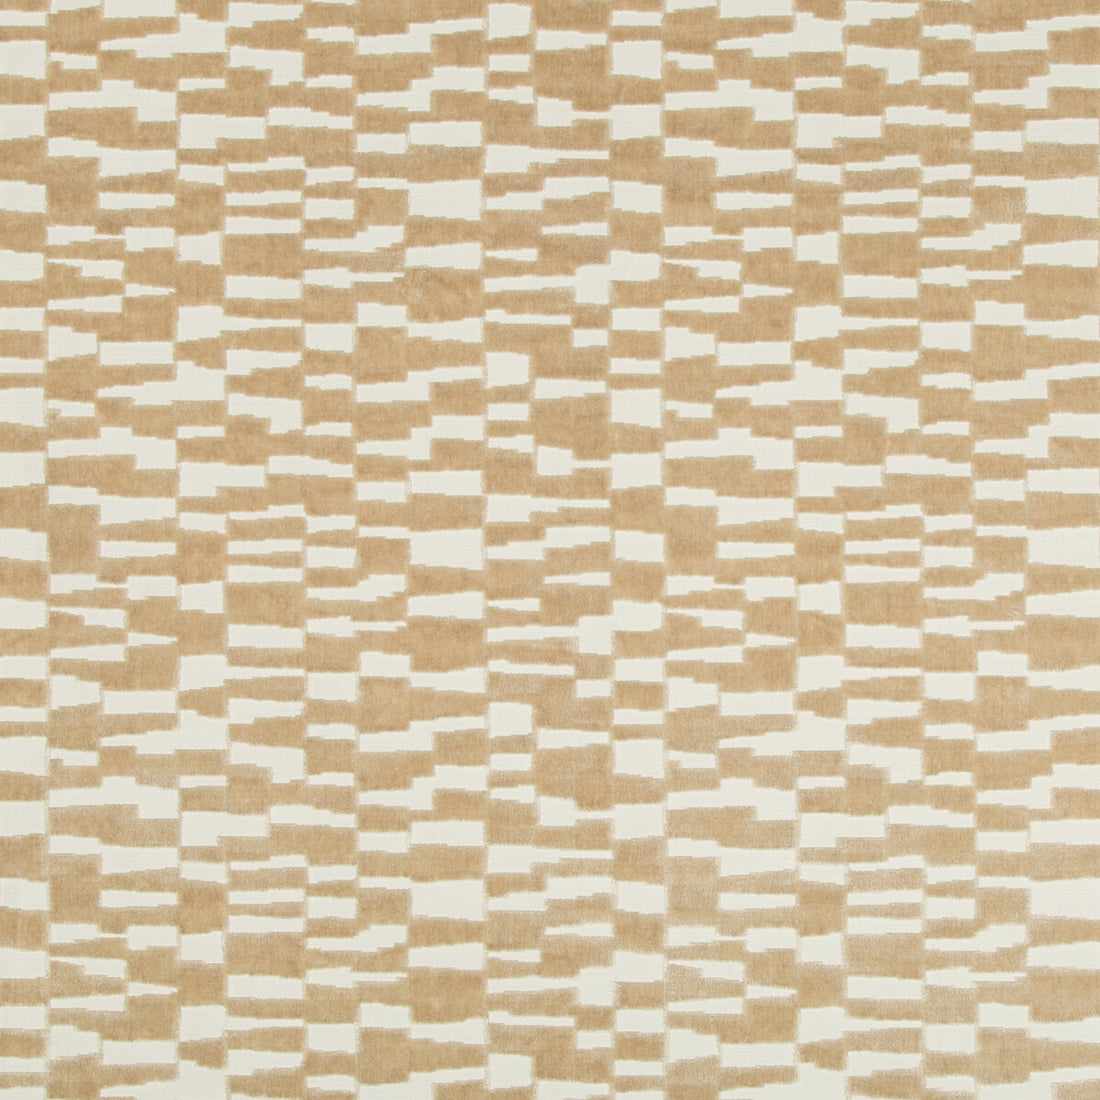 Mod Velvet fabric in camel color - pattern 35544.16.0 - by Kravet Basics in the Bermuda collection